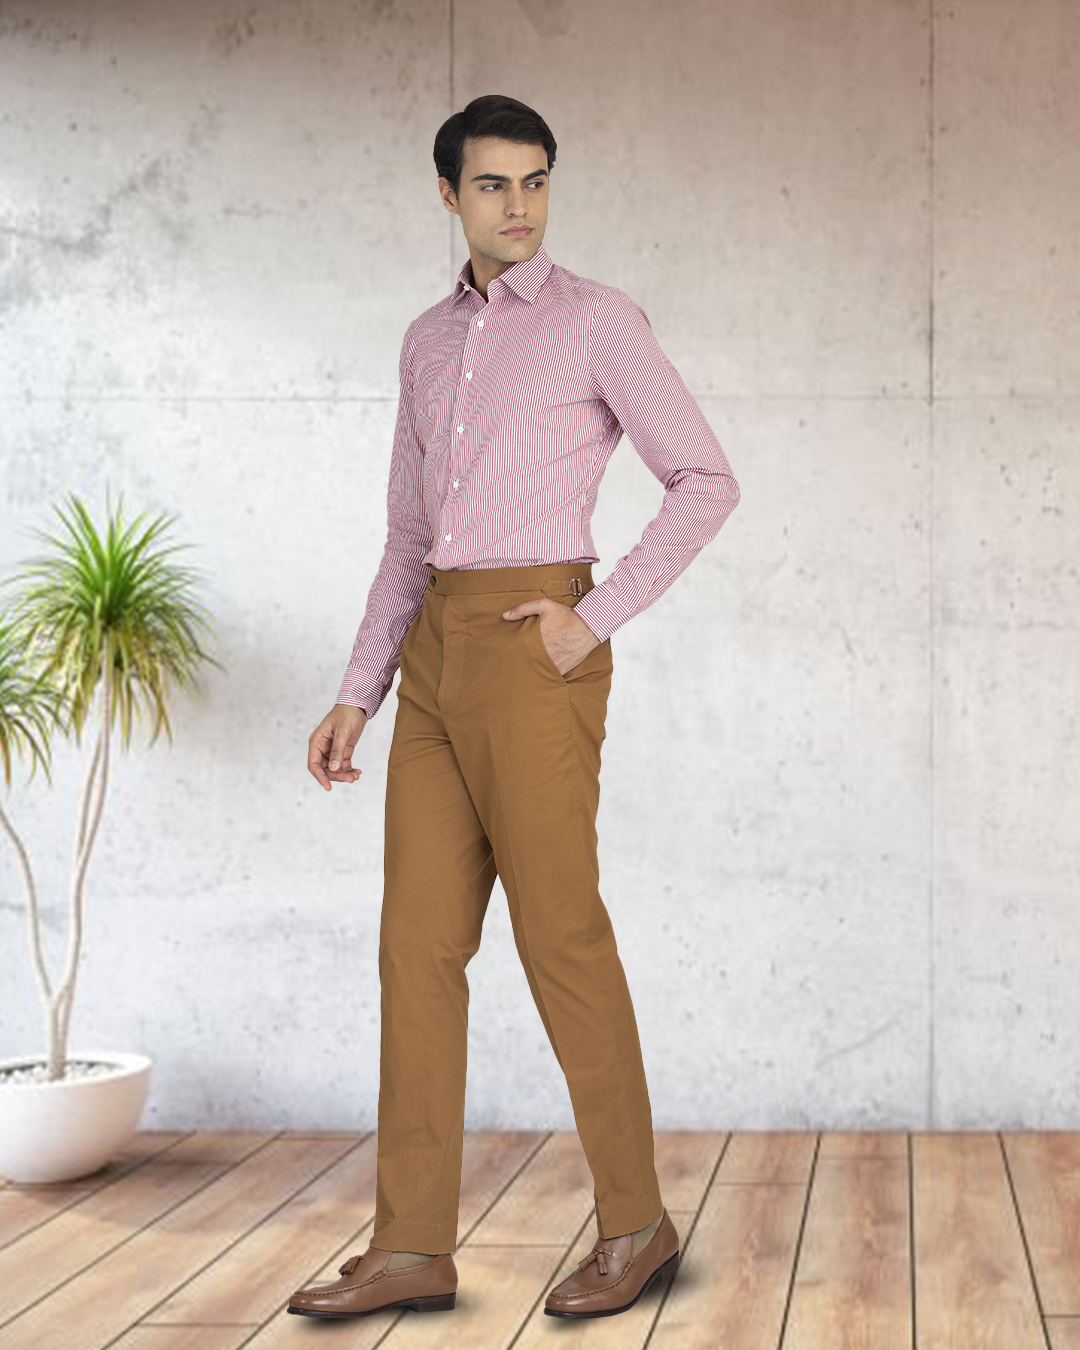 Model wearing custom Genoa Chino pants for men by Luxire in copper hand in pocket